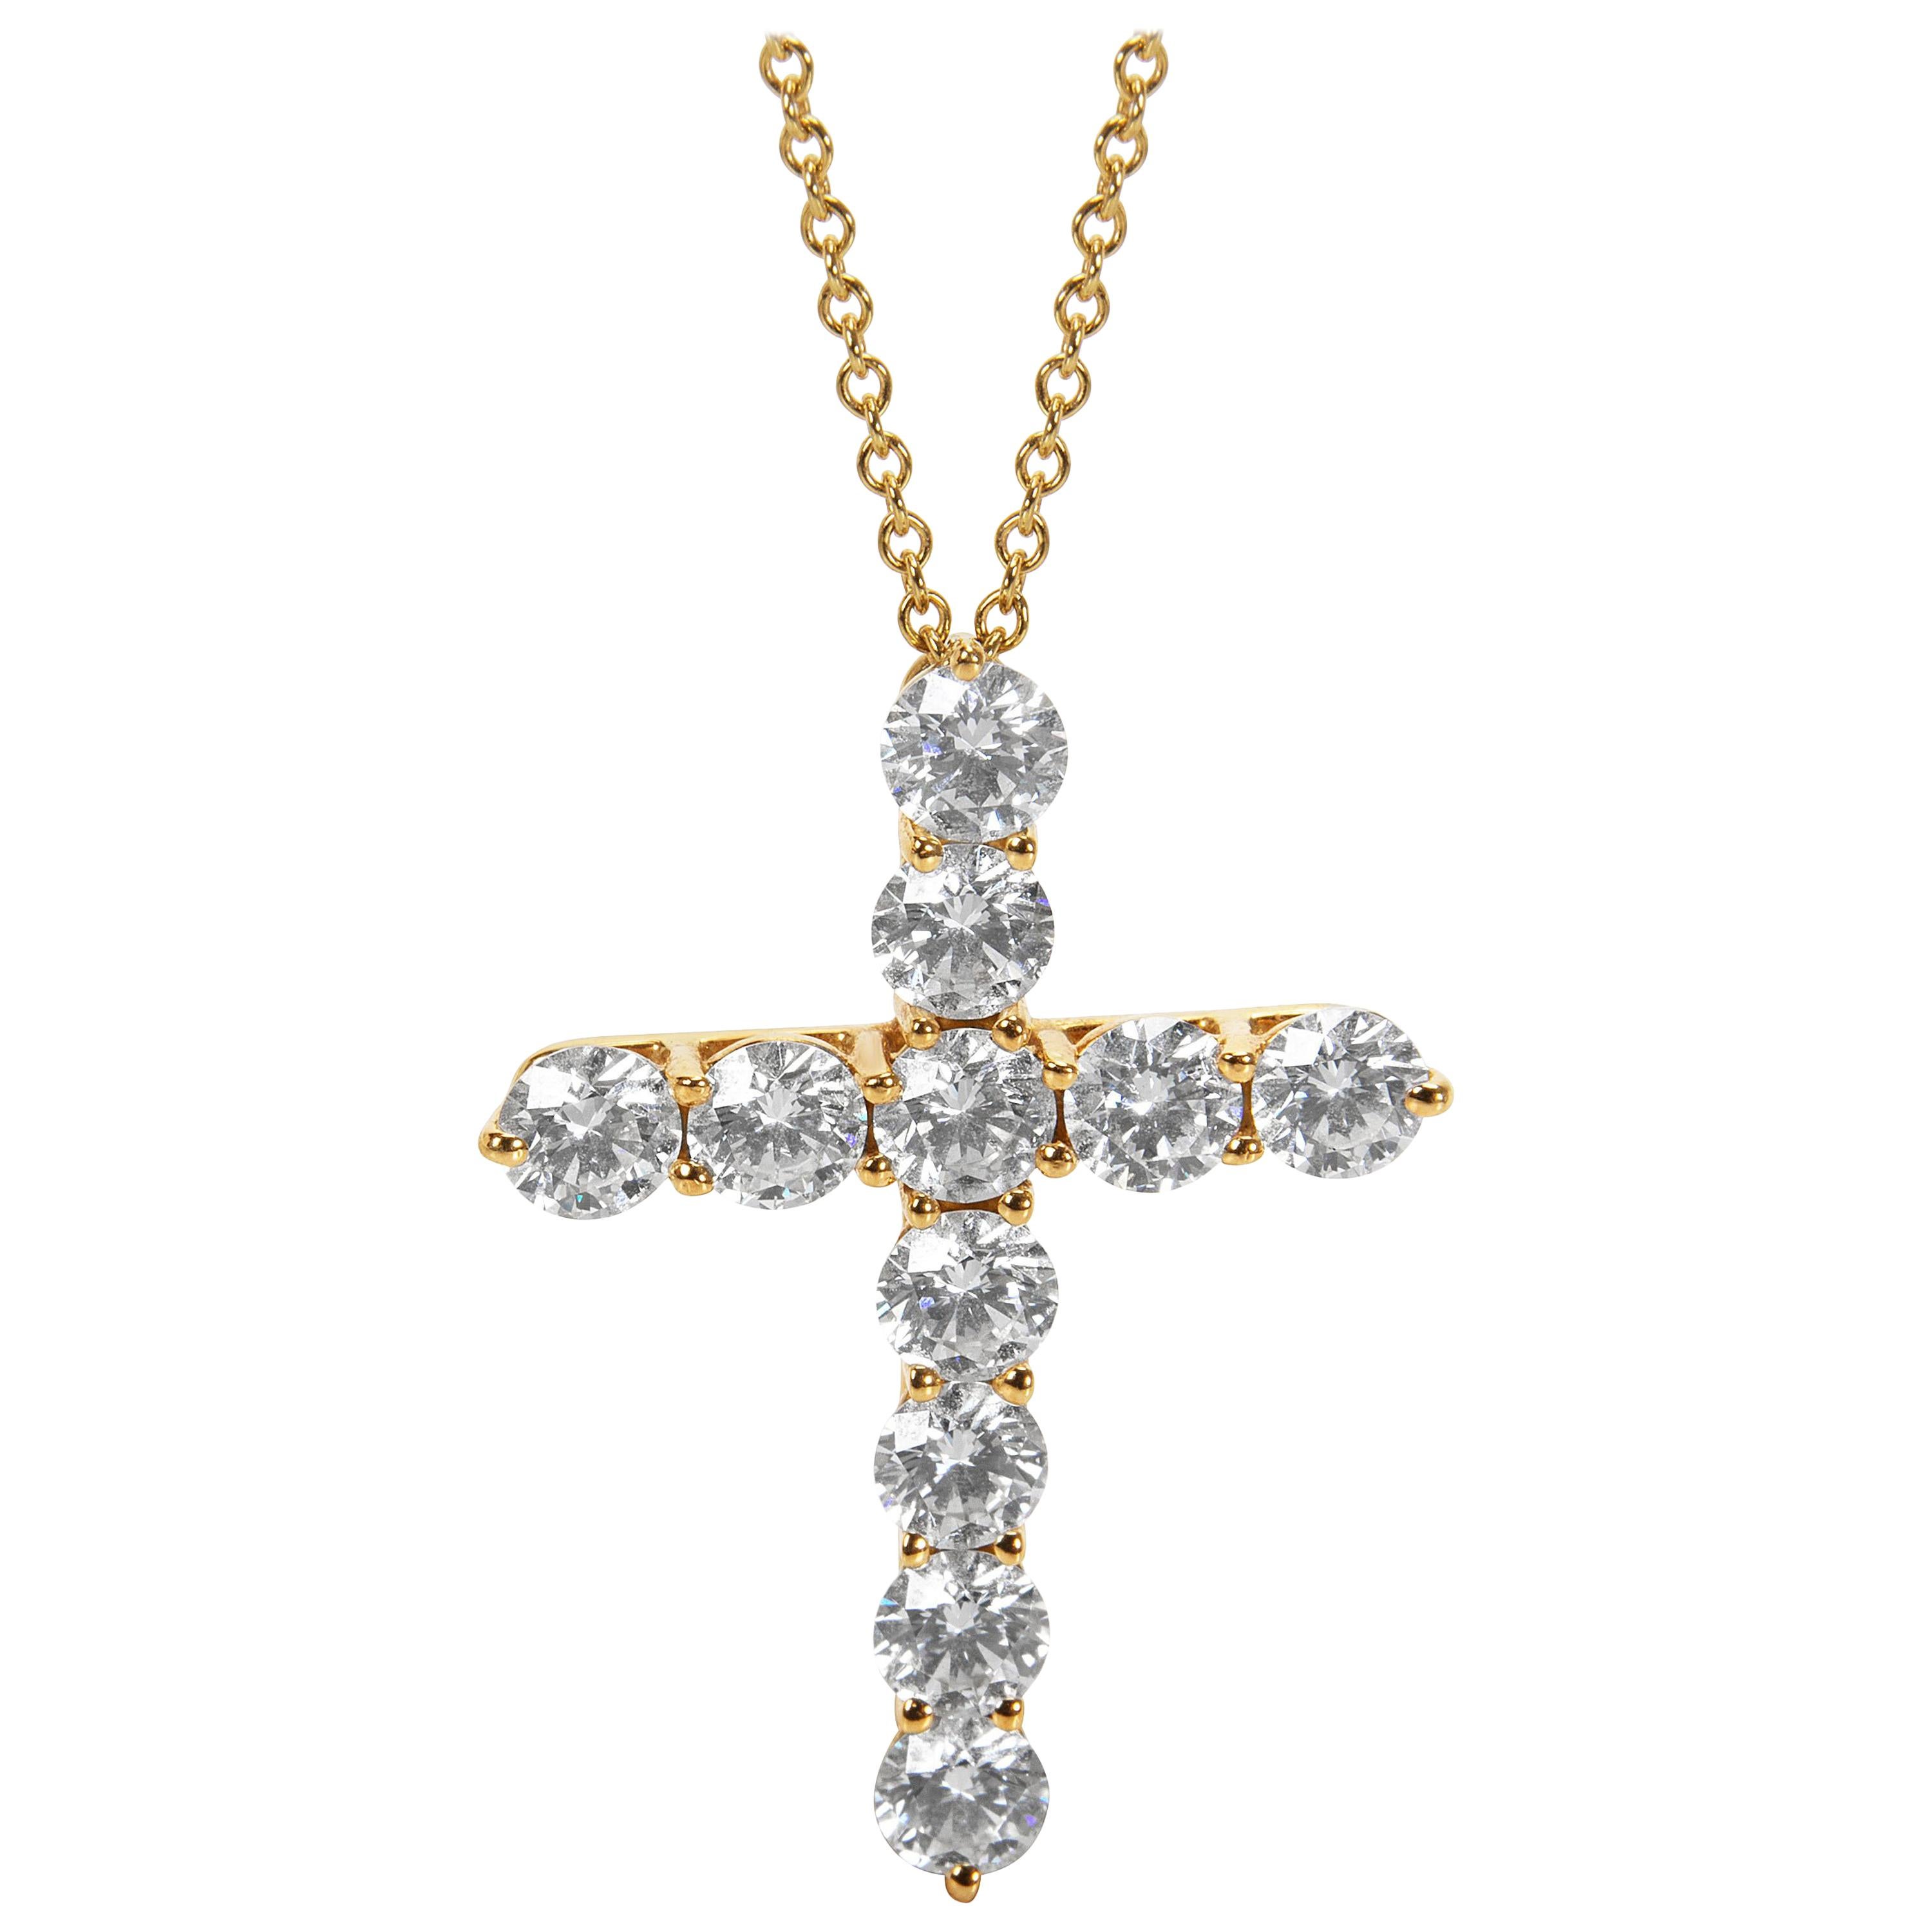 Tiffany & Co. Diamond Cross Necklace in 18 Karat Yellow Gold 2.00 Carat